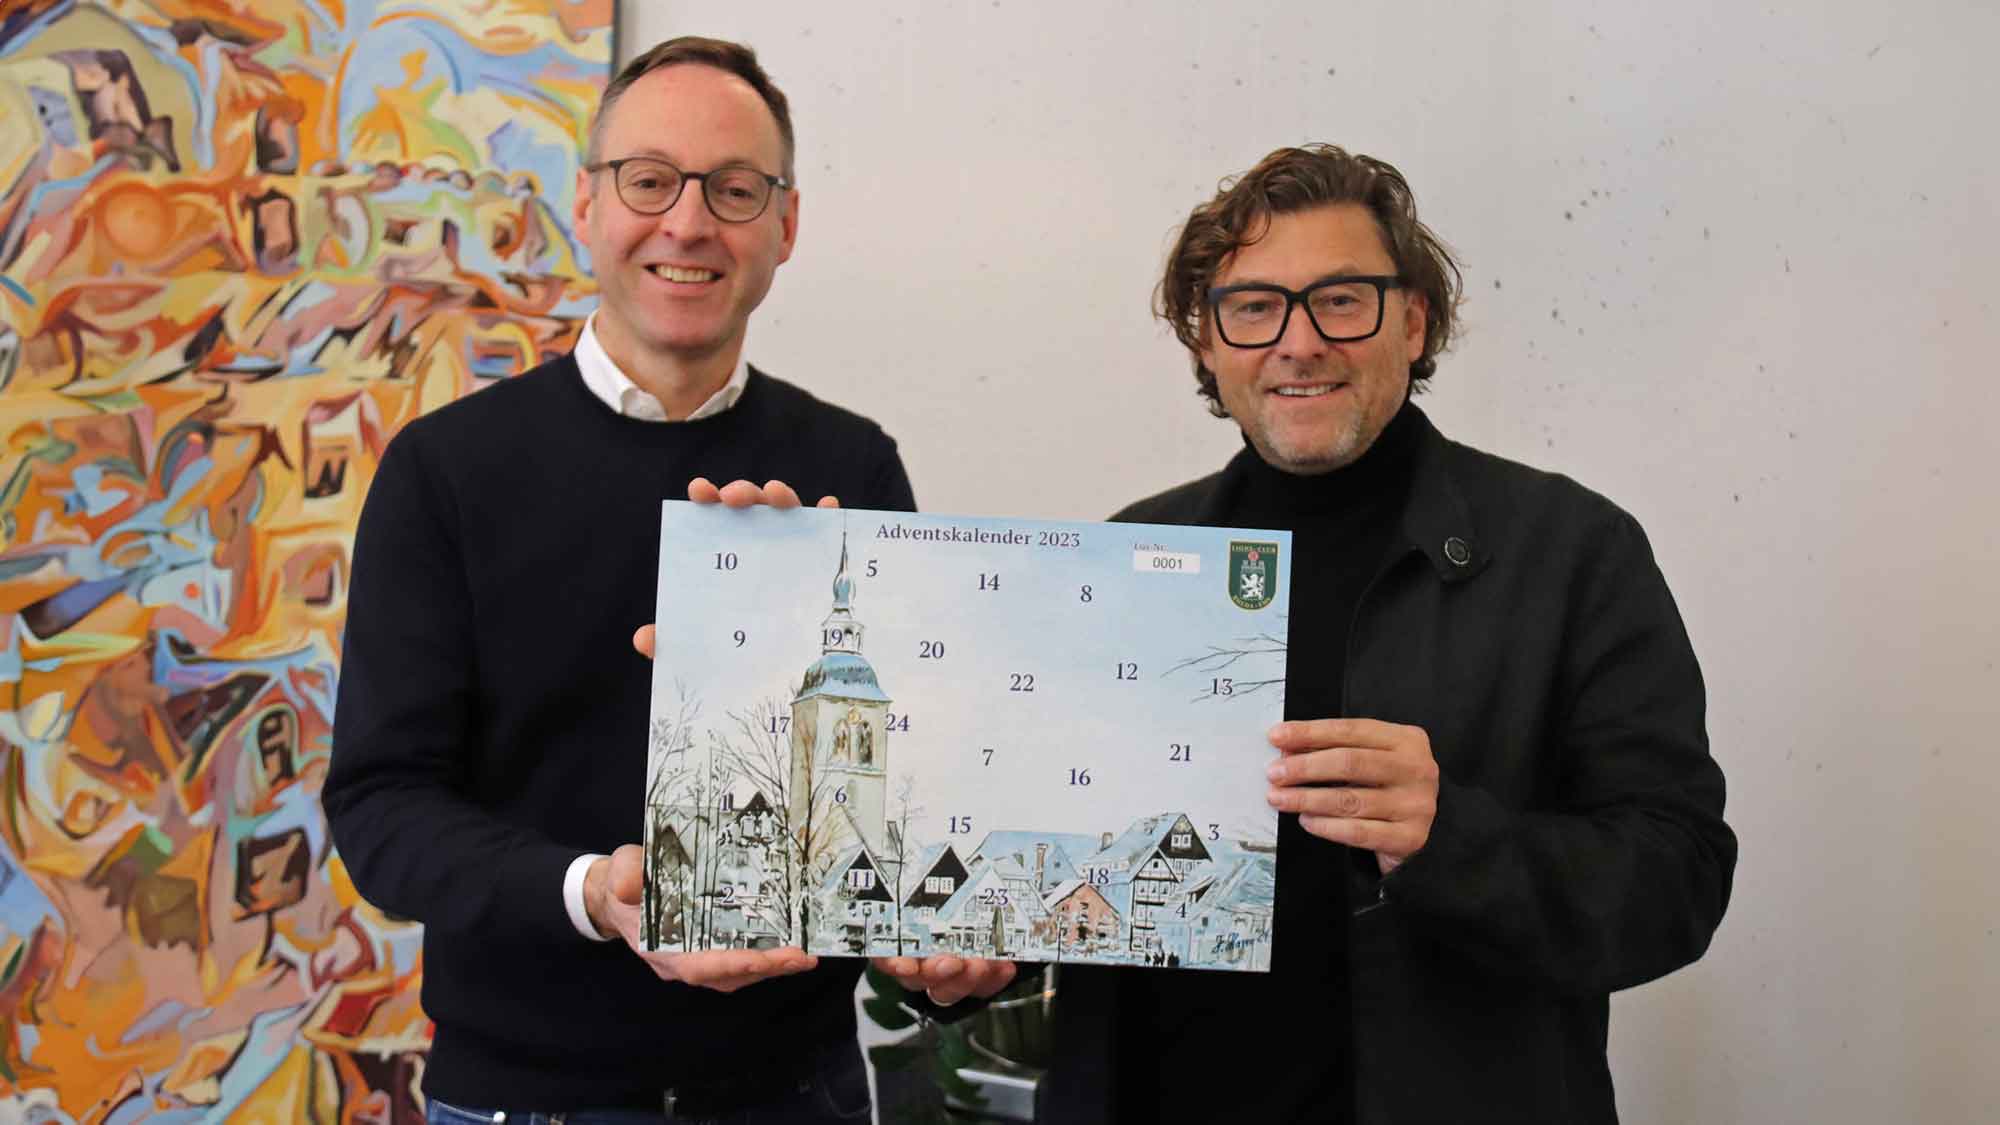 Kreis Gütersloh: Lions Club Rheda Ems übergibt ersten Adventskalender an Bürgermeister